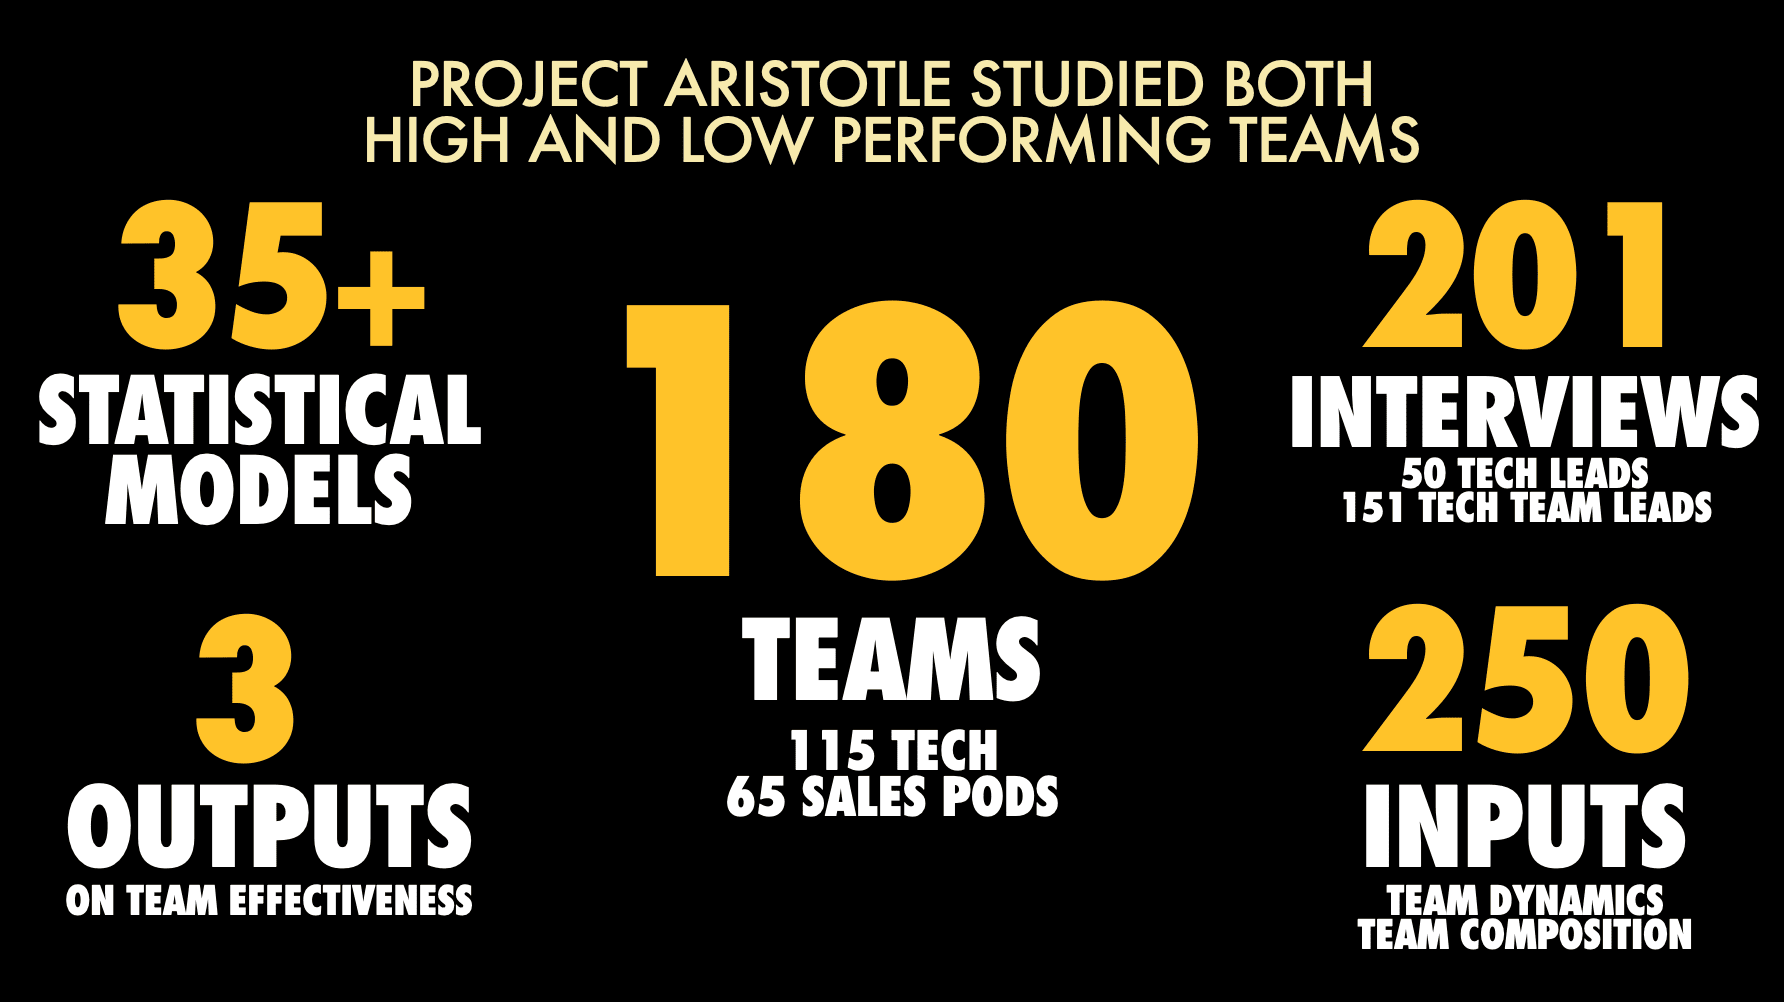 project aristotle